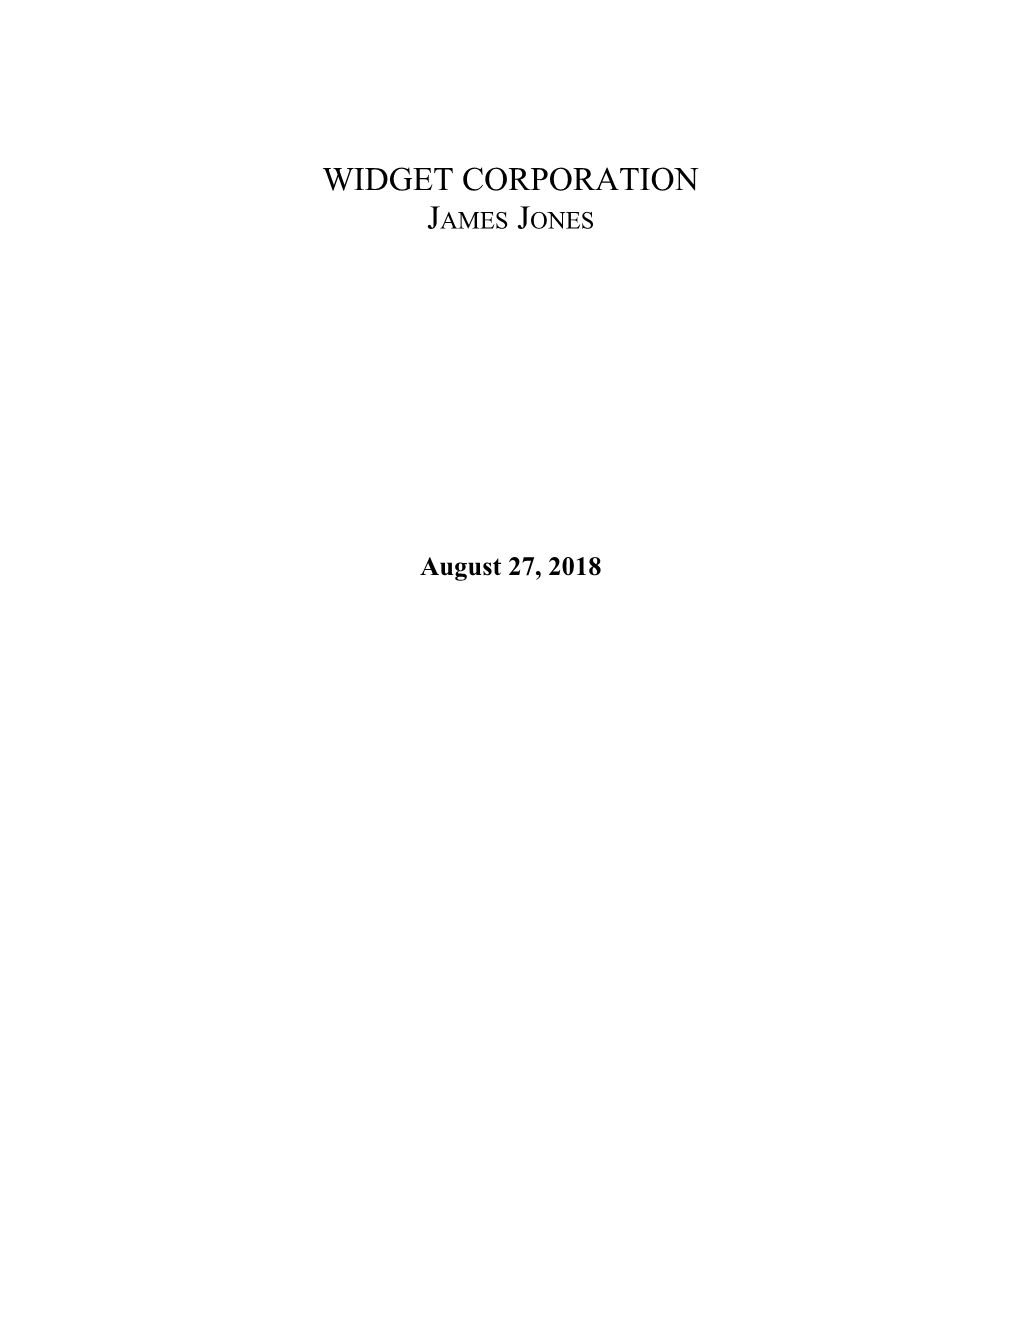 Widget Corporation